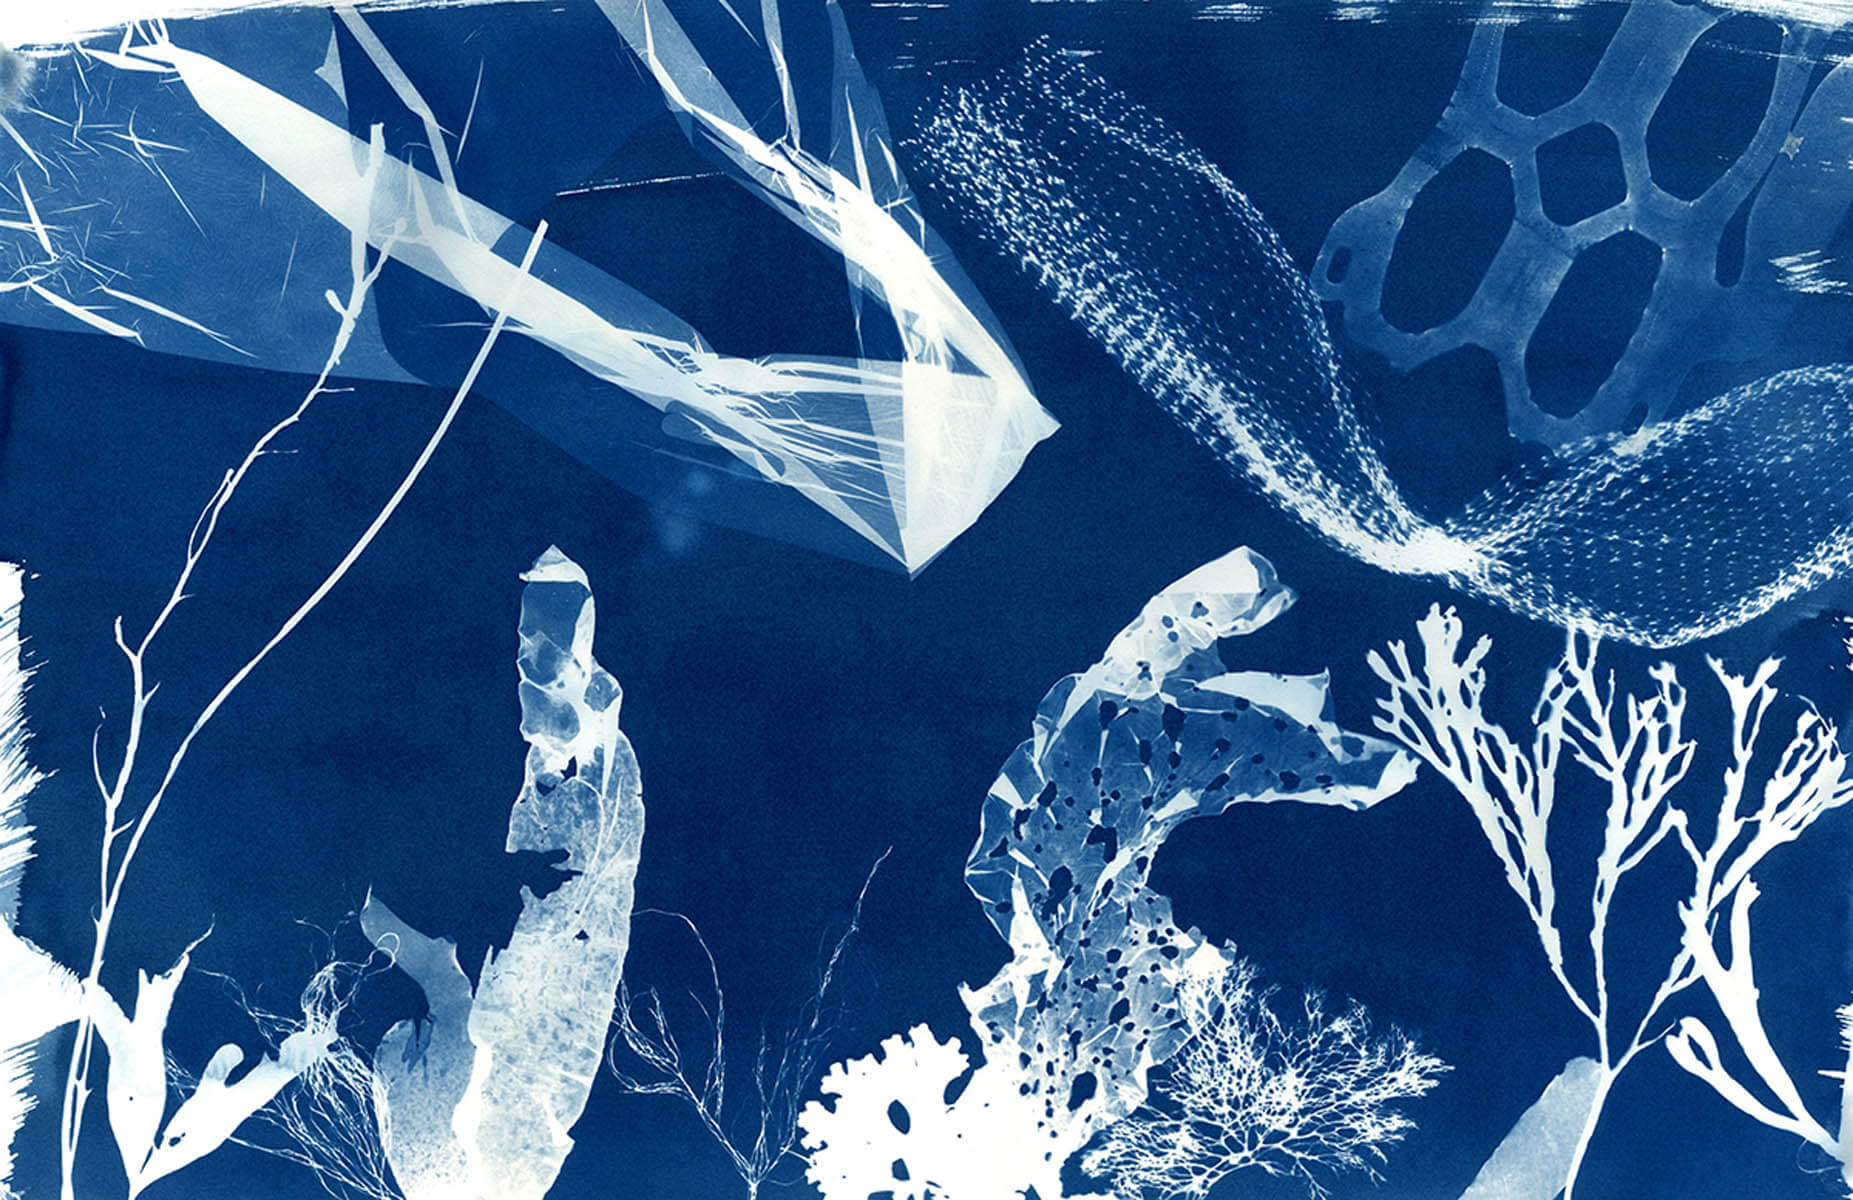 Cyanotype books online, making wonderful patterns